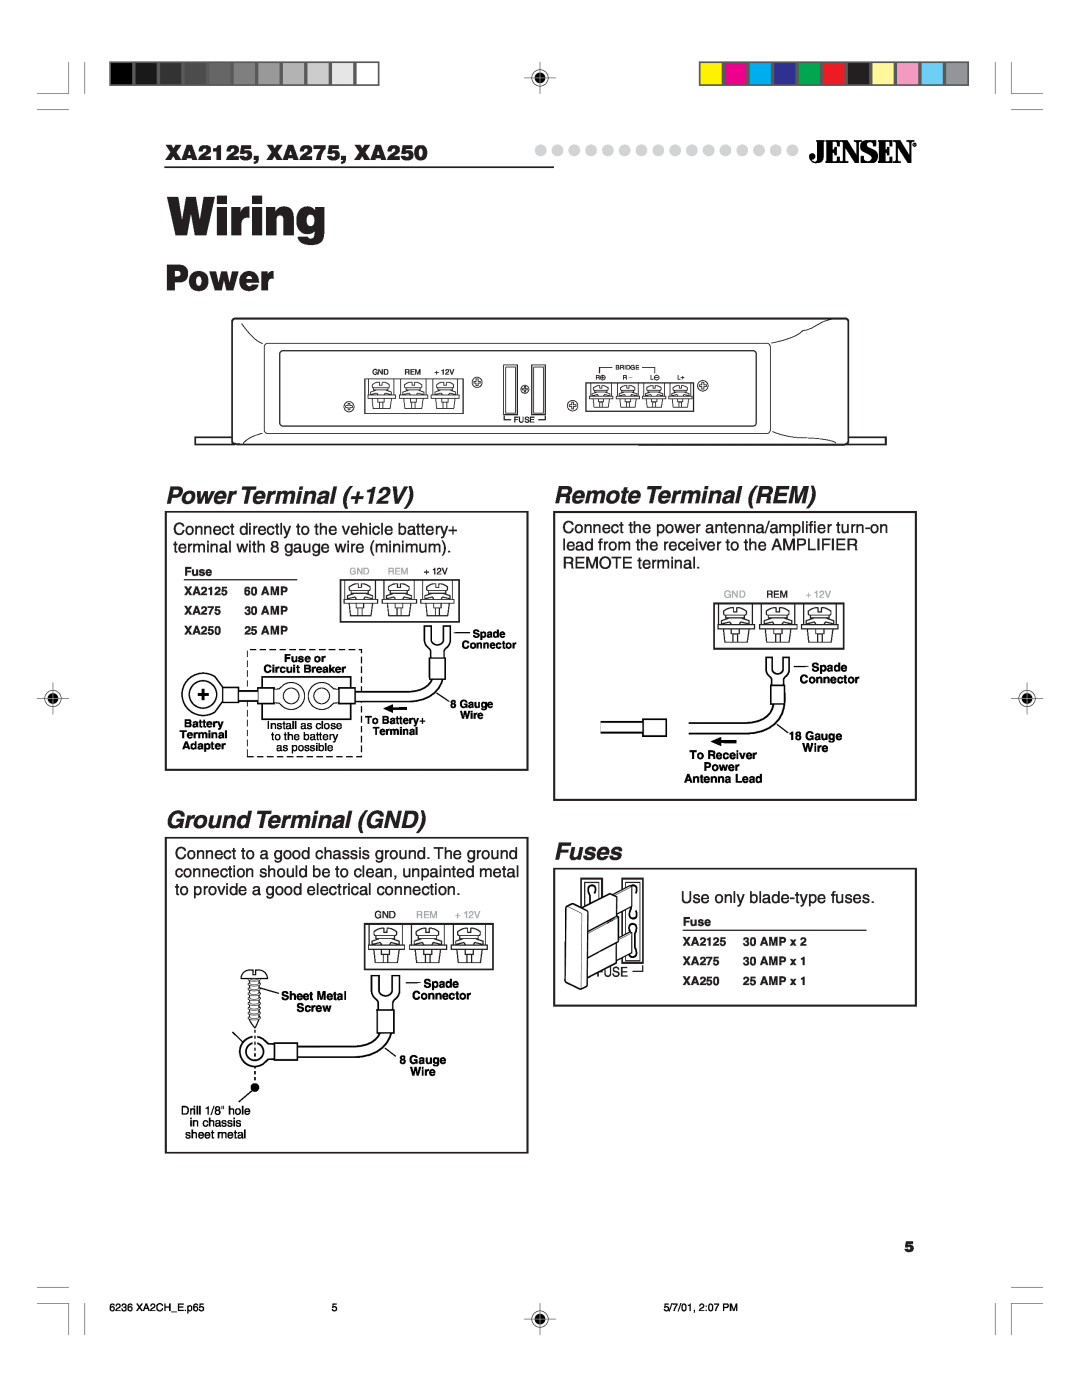 Jensen Tools Wiring, Power Terminal +12V, Remote Terminal REM, Ground Terminal GND, Fuses, XA2125, XA275, XA250 